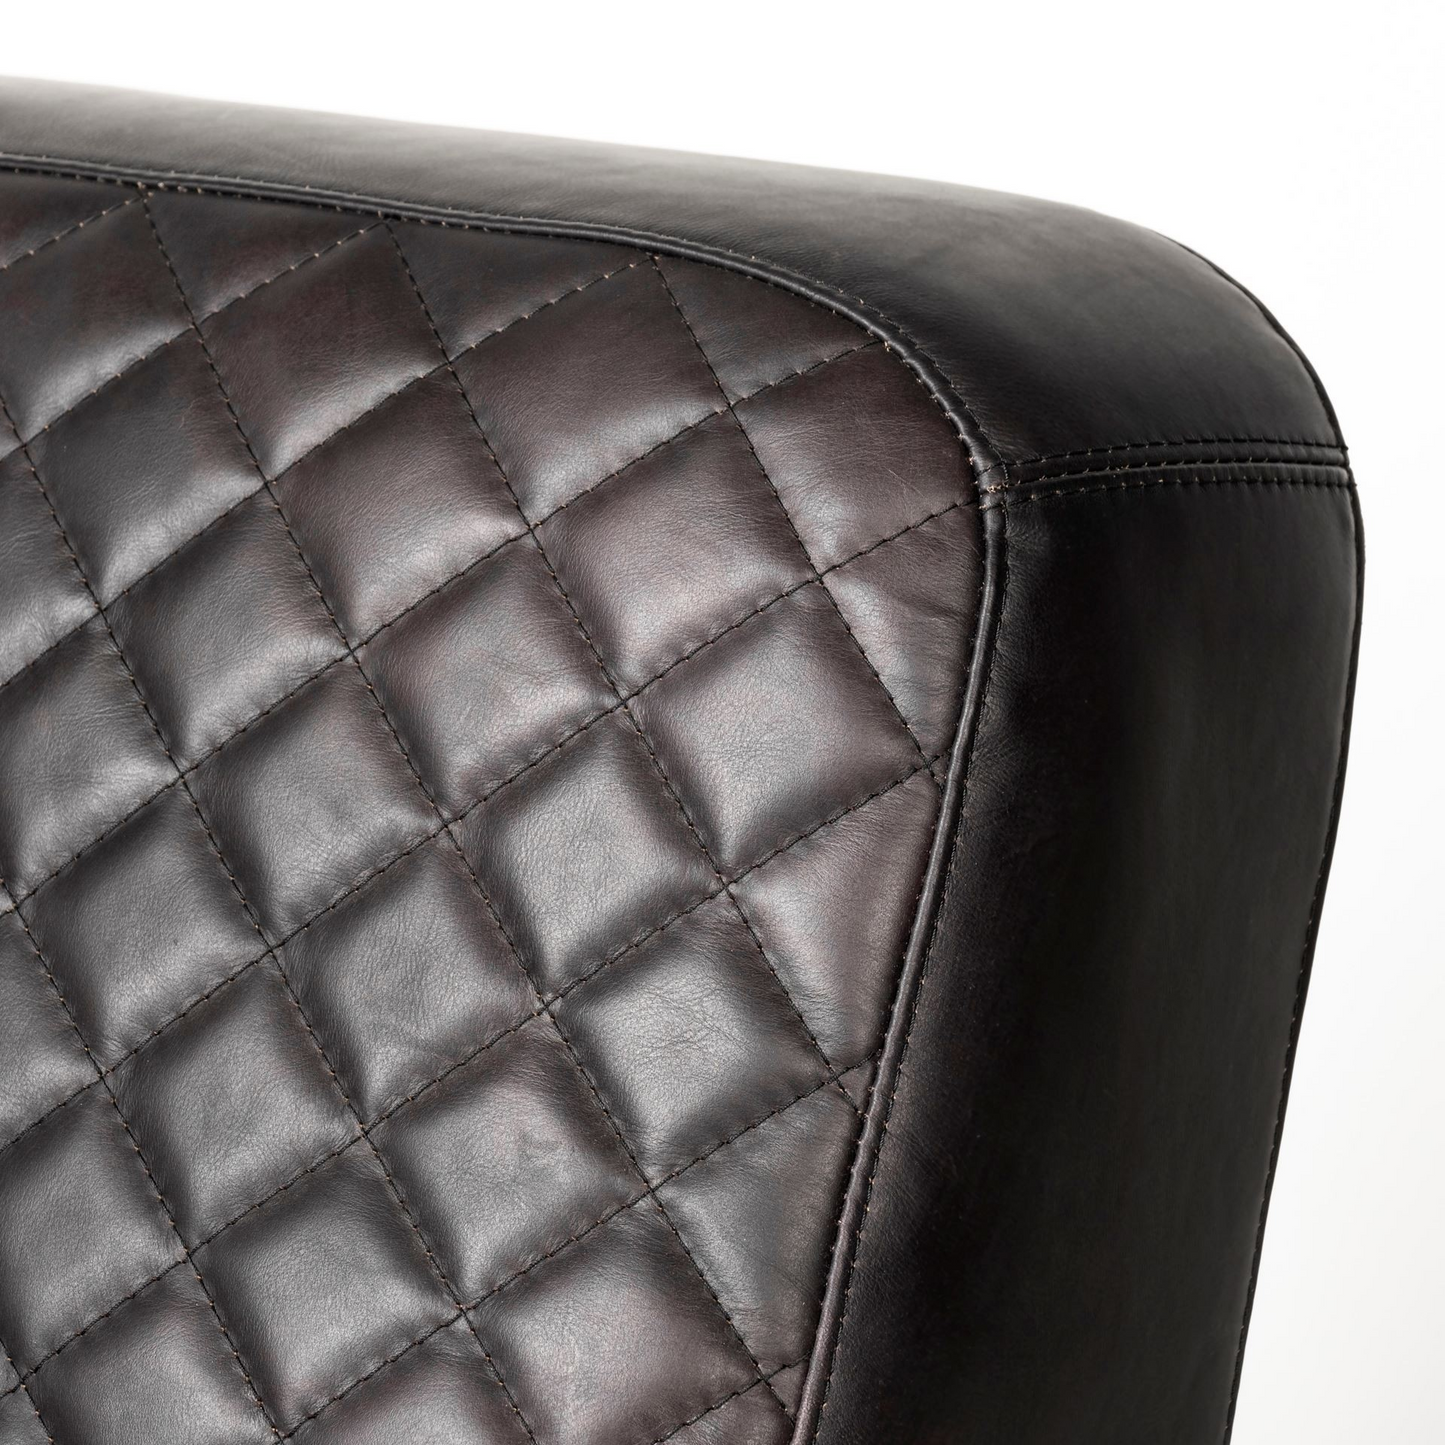 Black Leather Diamond Pattern Gold Club Chair